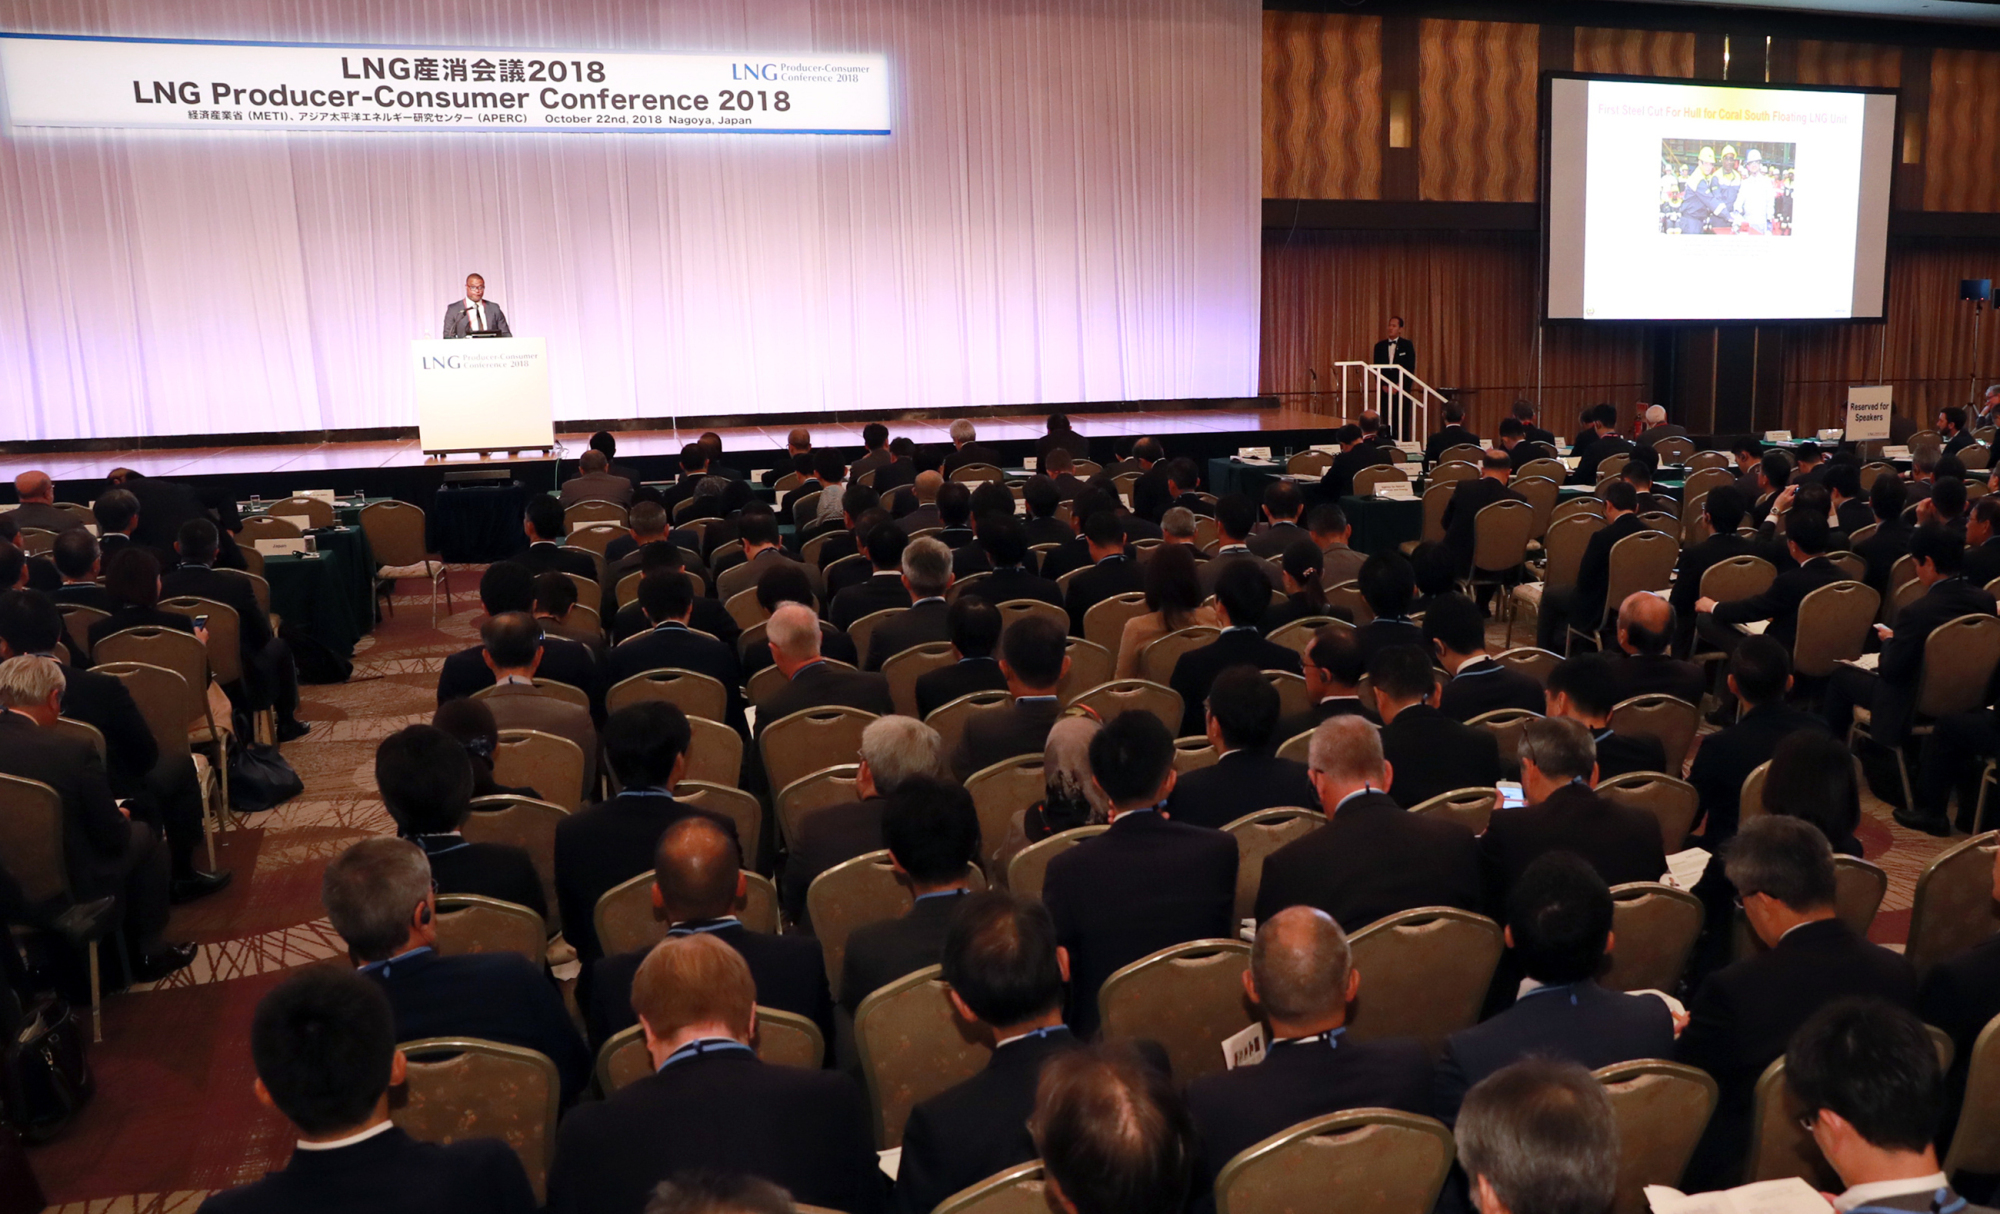 Jera drew attention at the LNG Producer-Consumer Conference 2018 in Nagoya last October. | CHUNICHI SHIMBUN